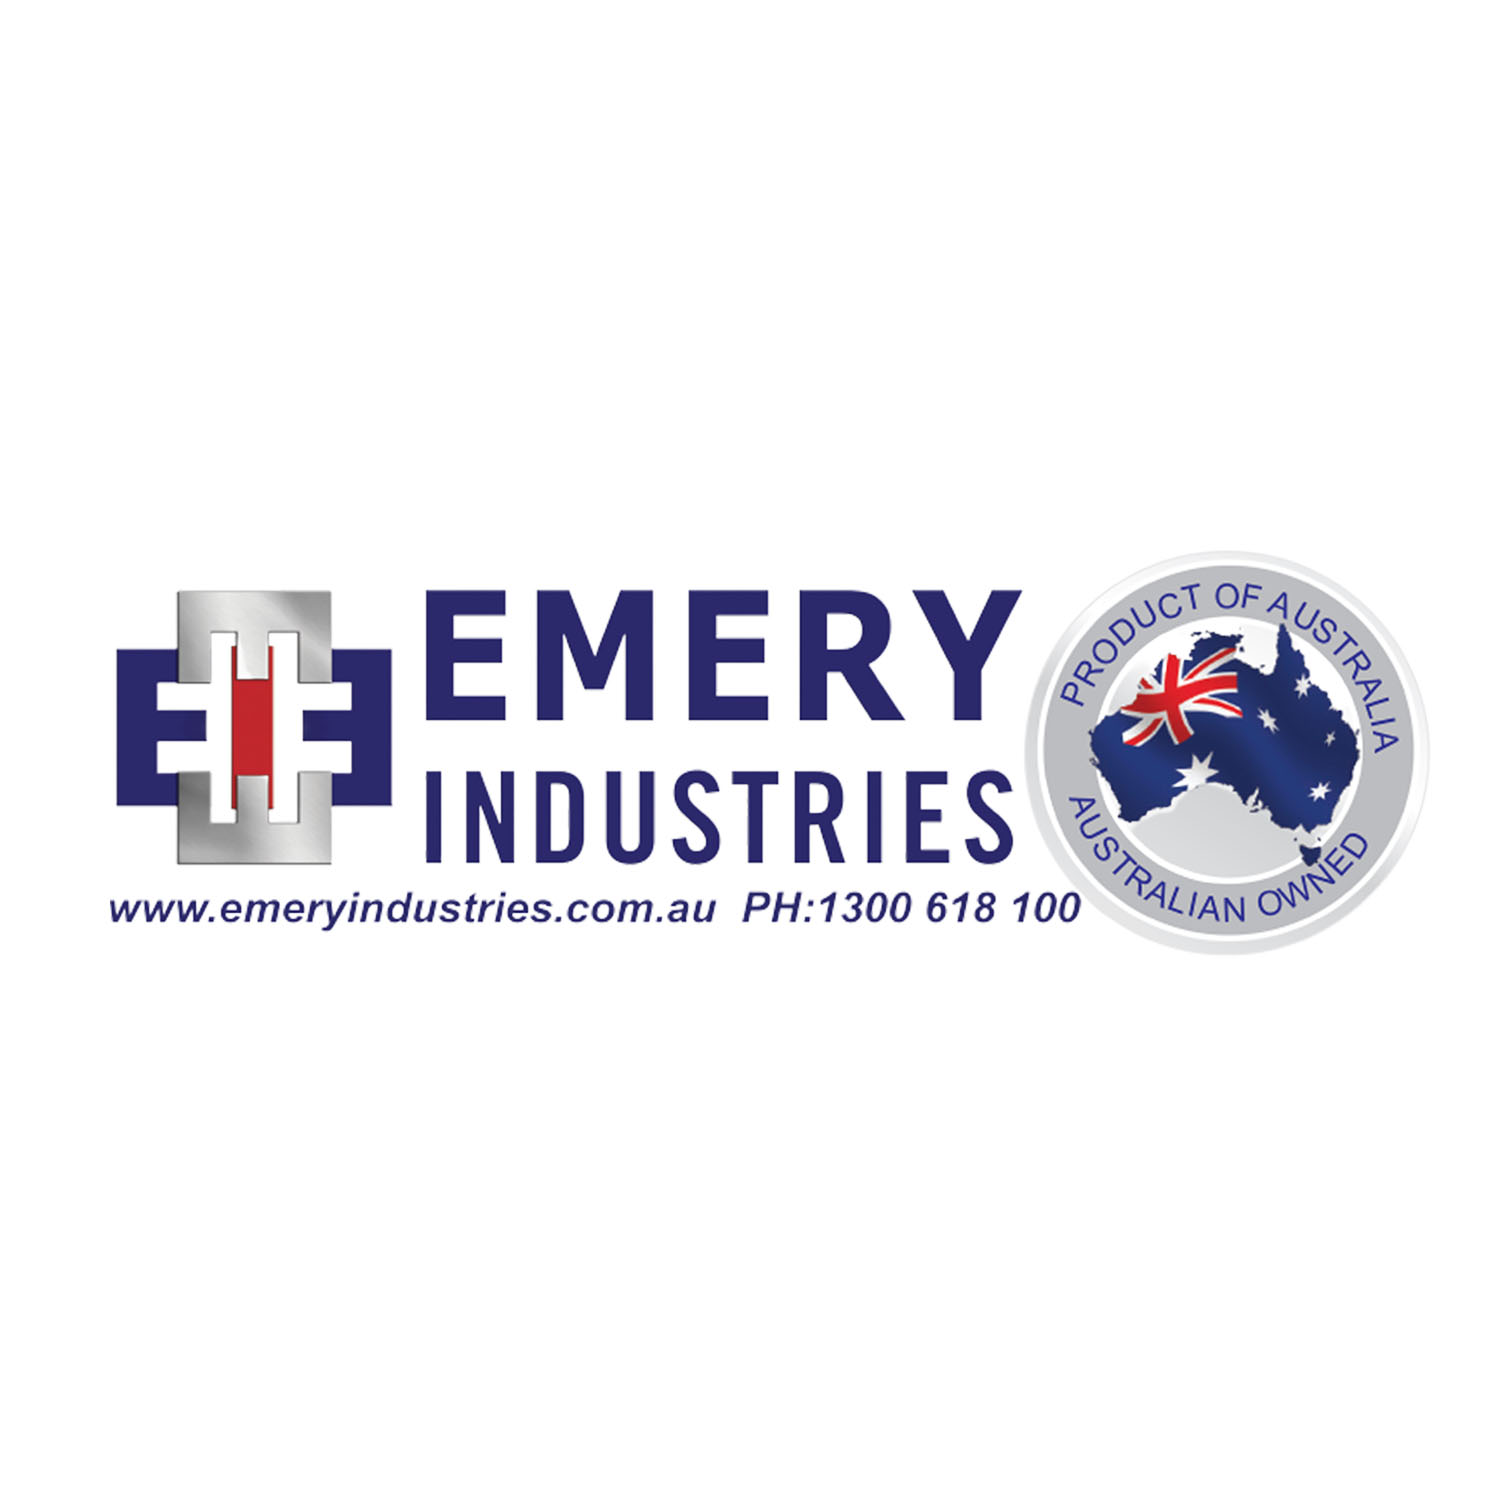 Emery Industries